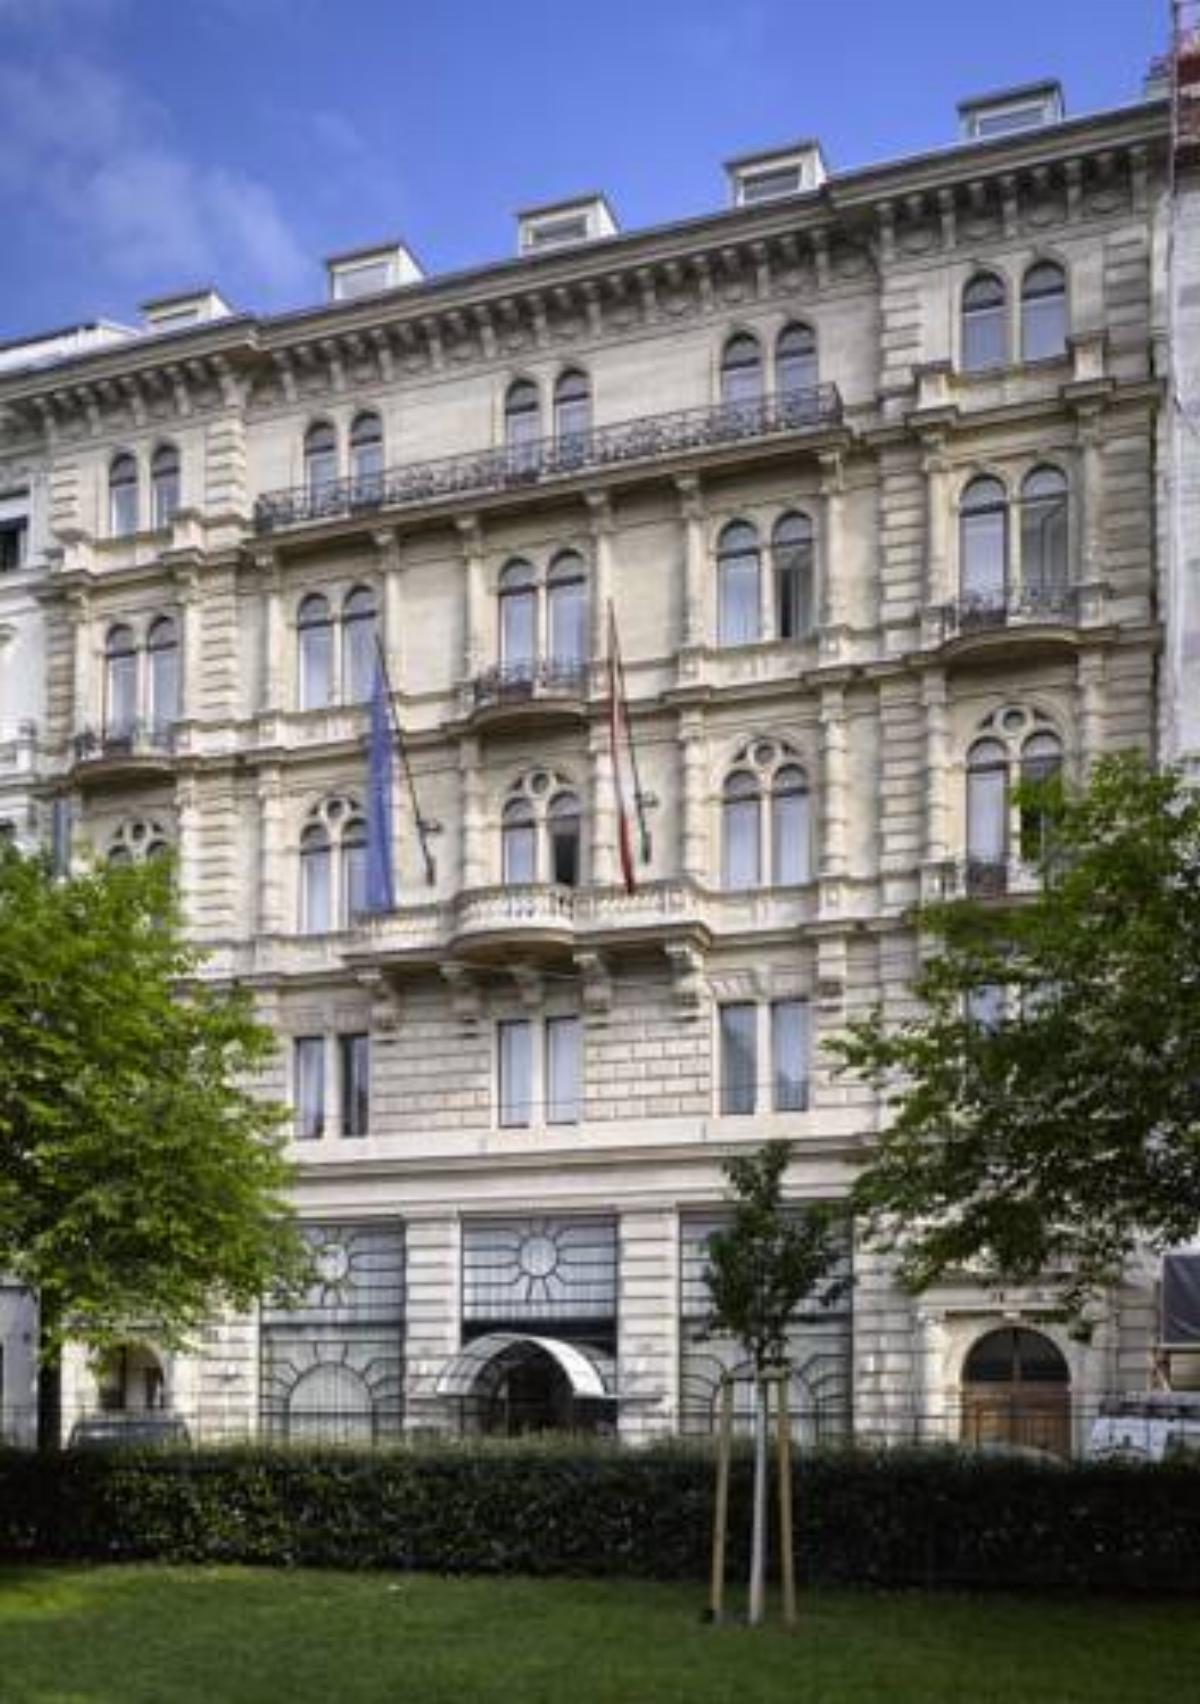 K+K Palais Hotel Hotel Wien Austria